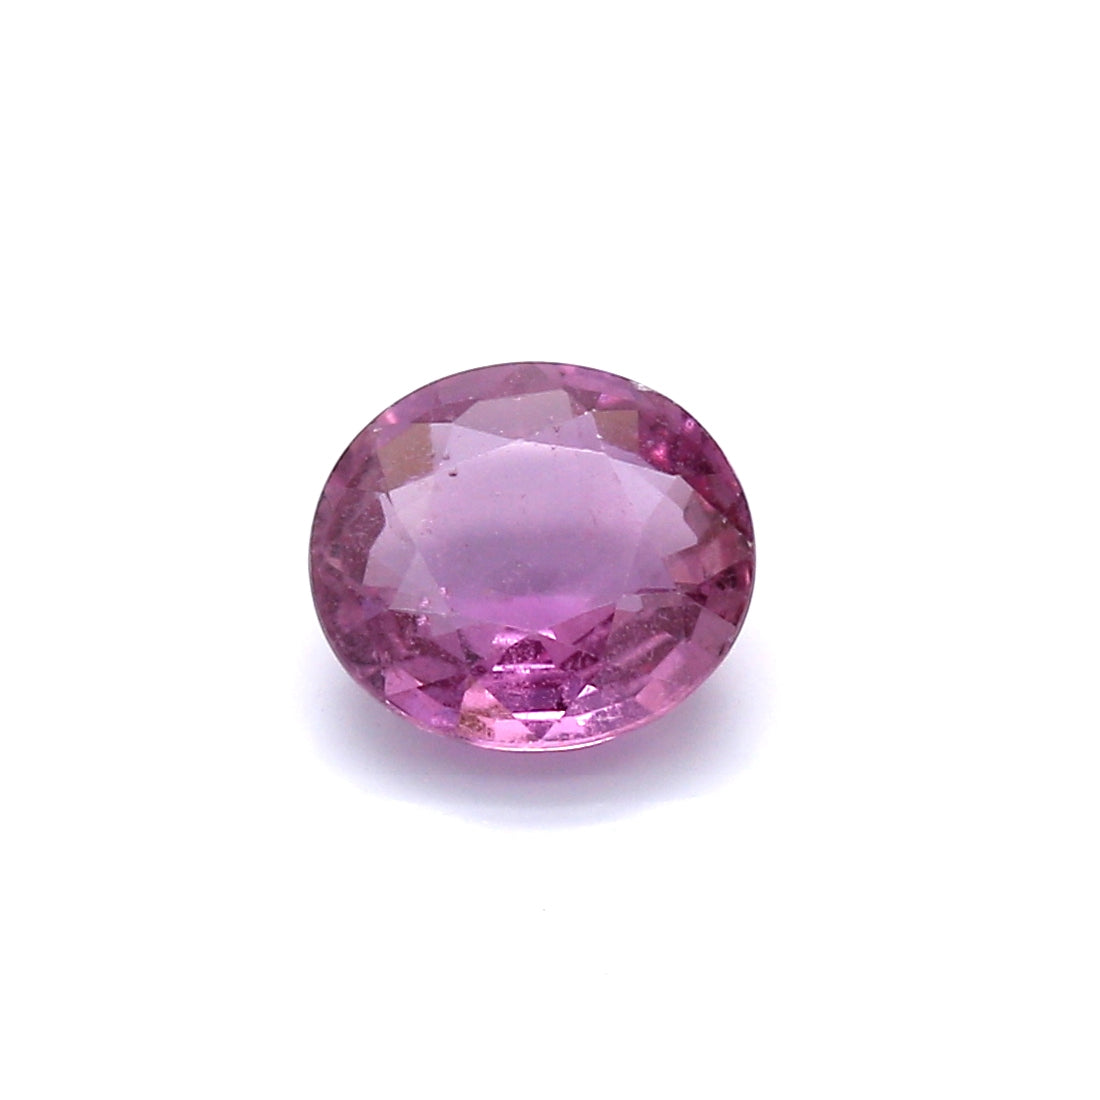 1.87ct Purplish Pink, Oval Sapphire, Heated, Madagascar - 7.81 x 7.11 x 3.65mm